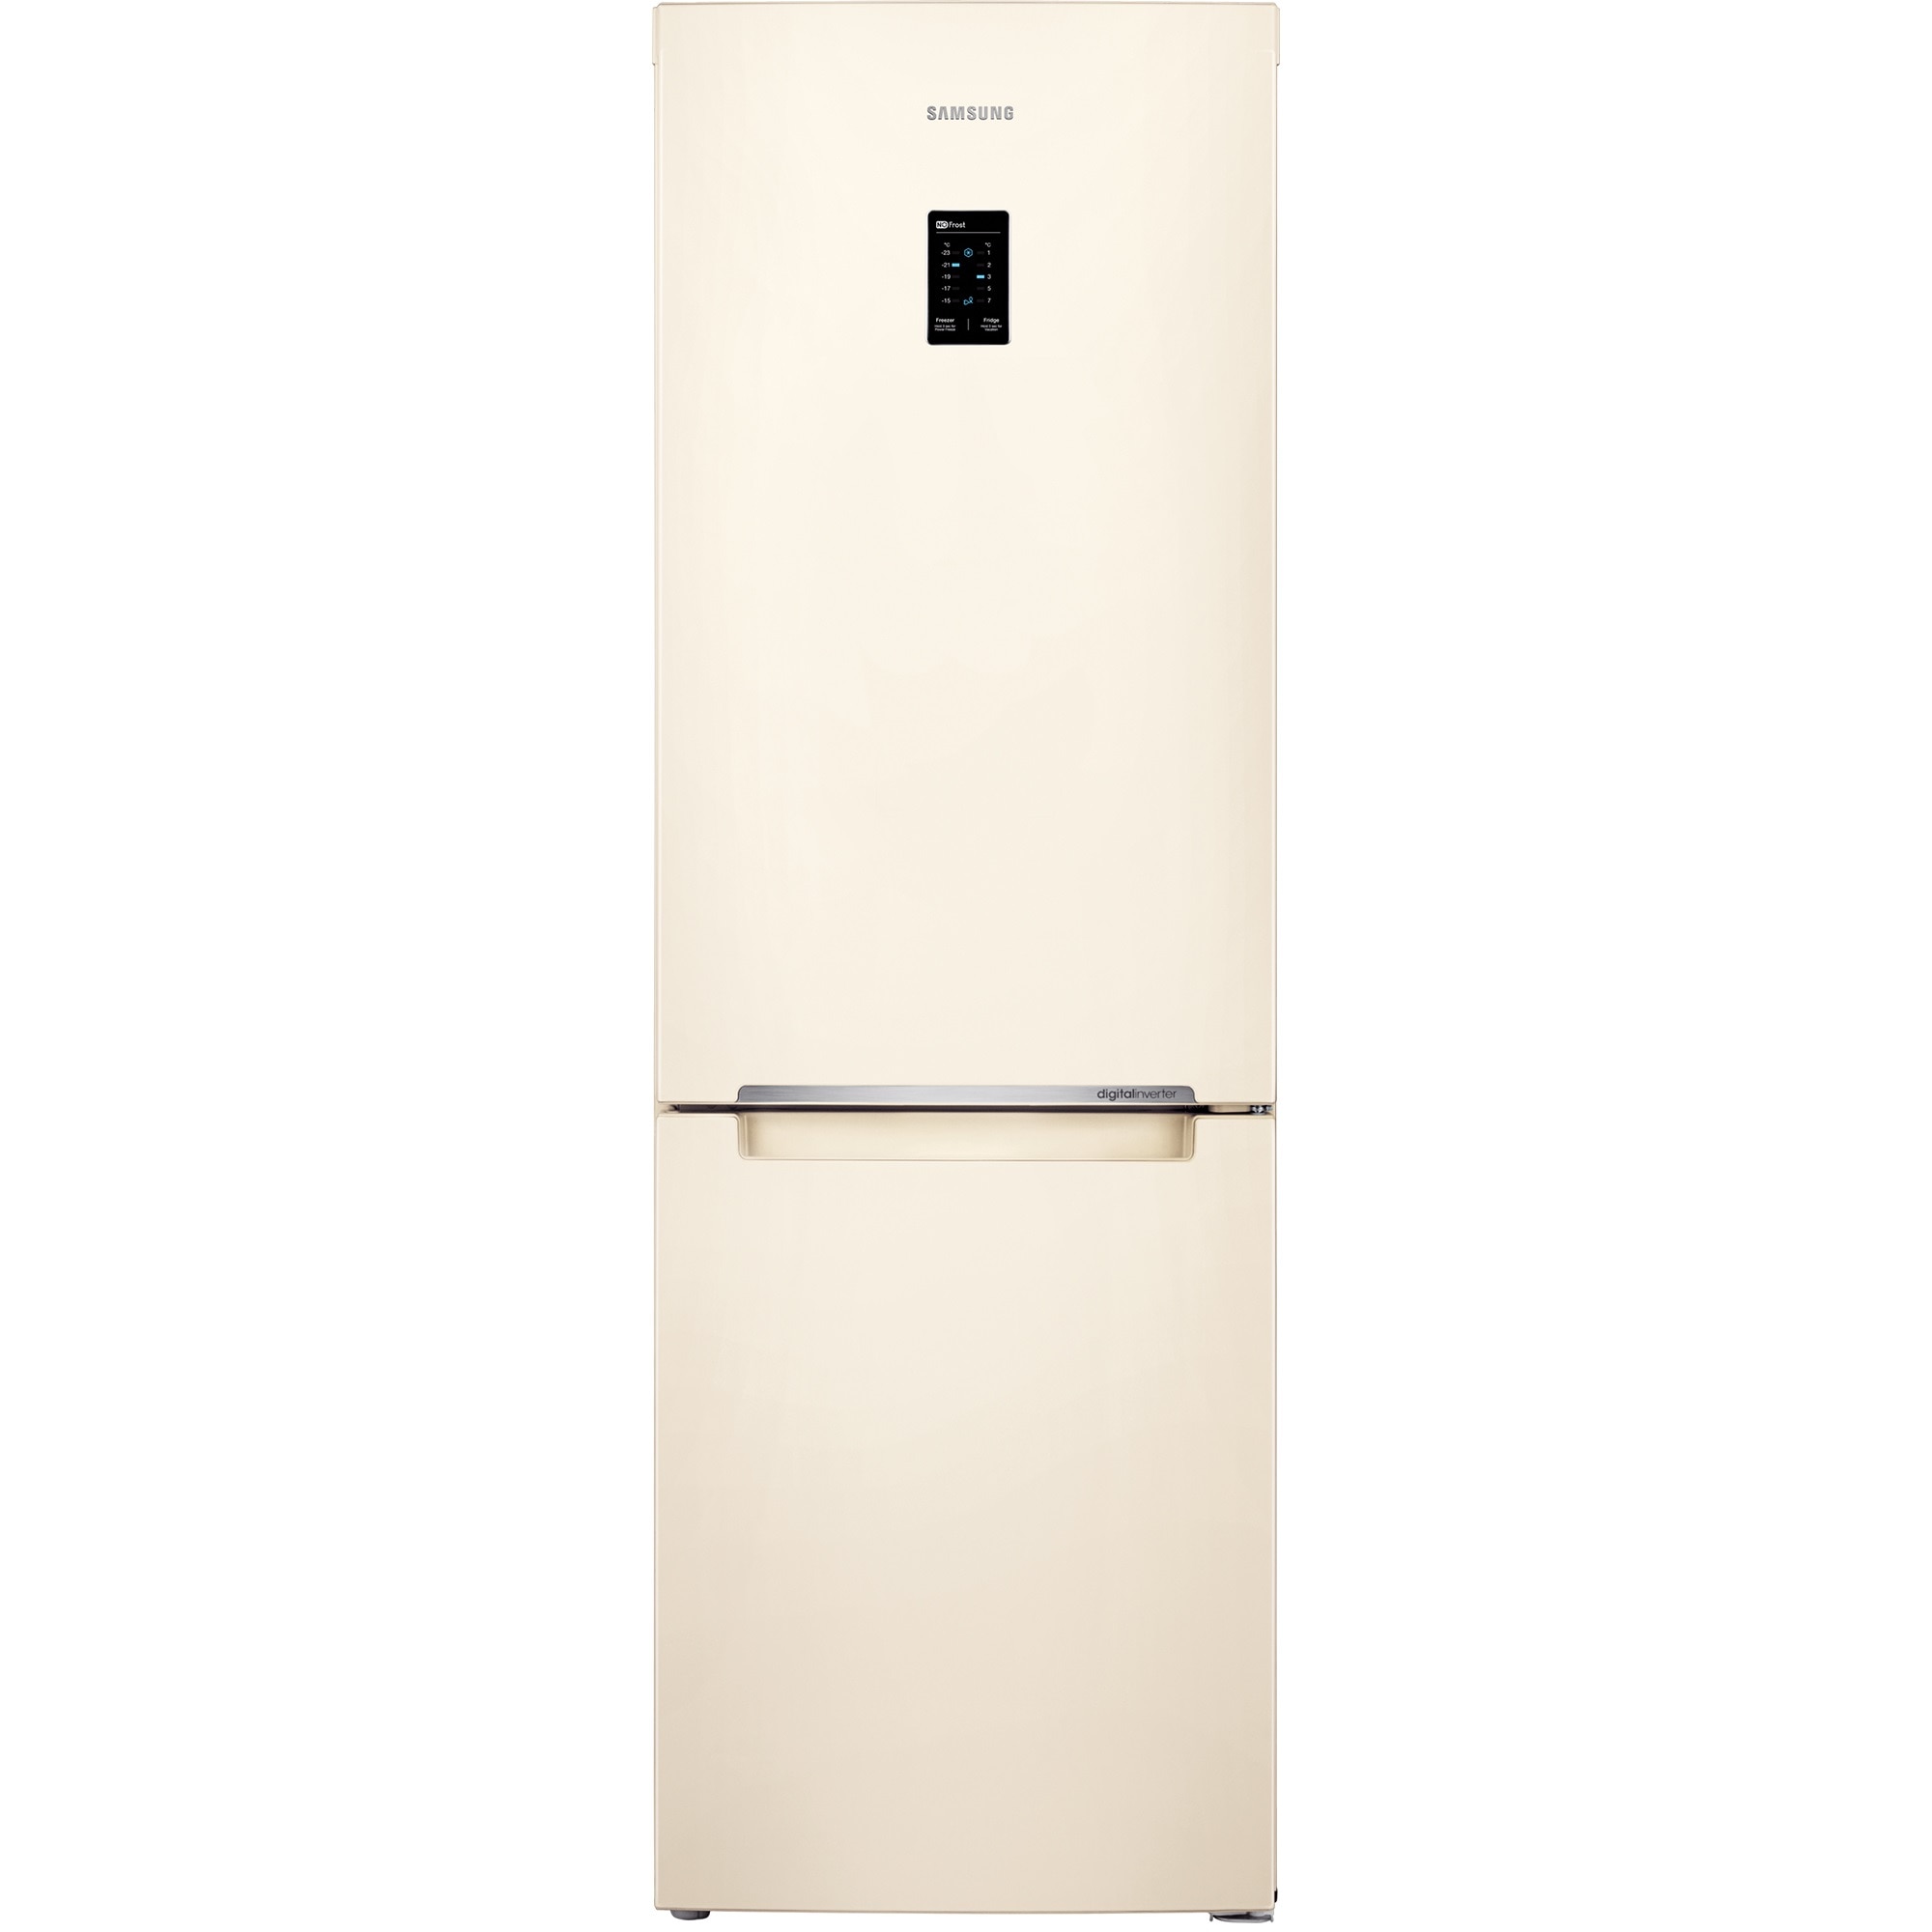 Хладилник Samsung RB31FERNDEF с обем от 310 л.